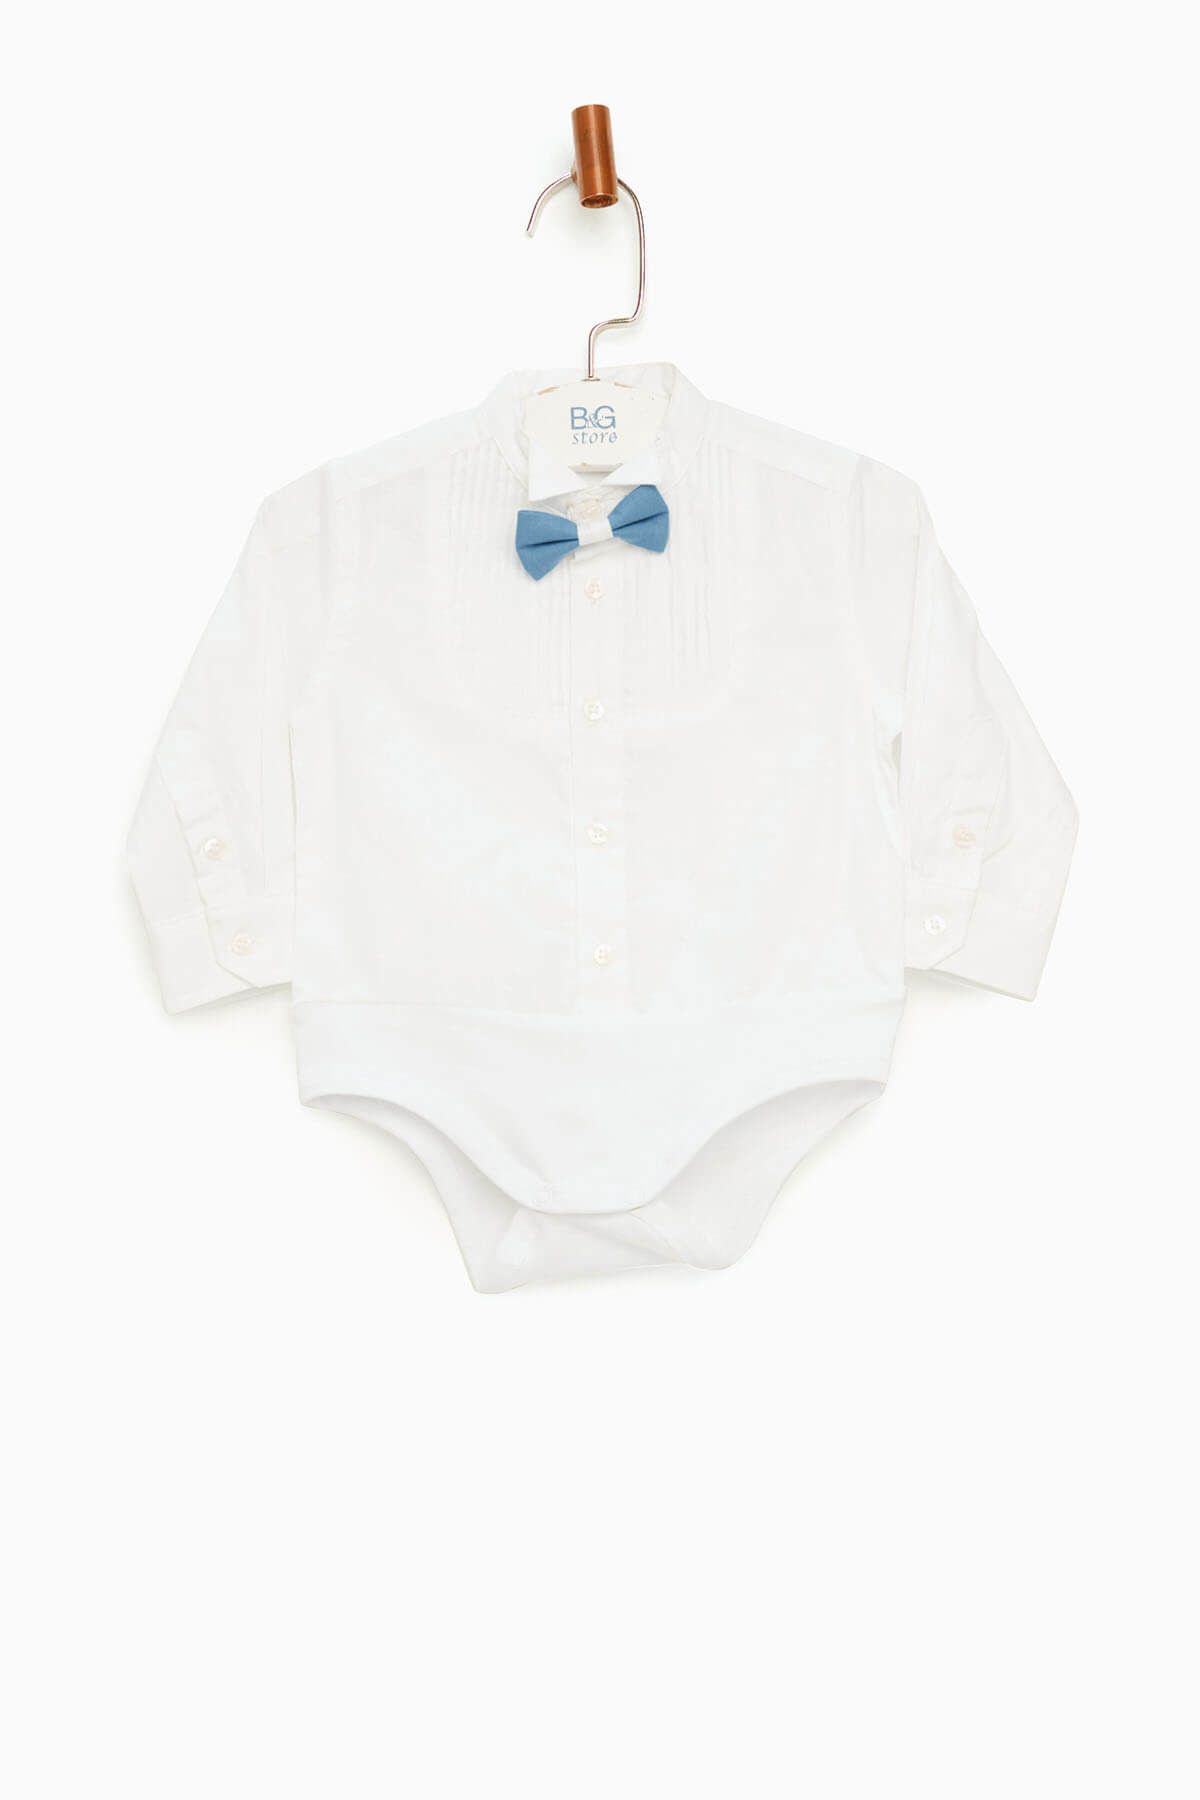 BG Baby Erkek Bebek Beyaz Smokin Gömlek NS18SSG1614